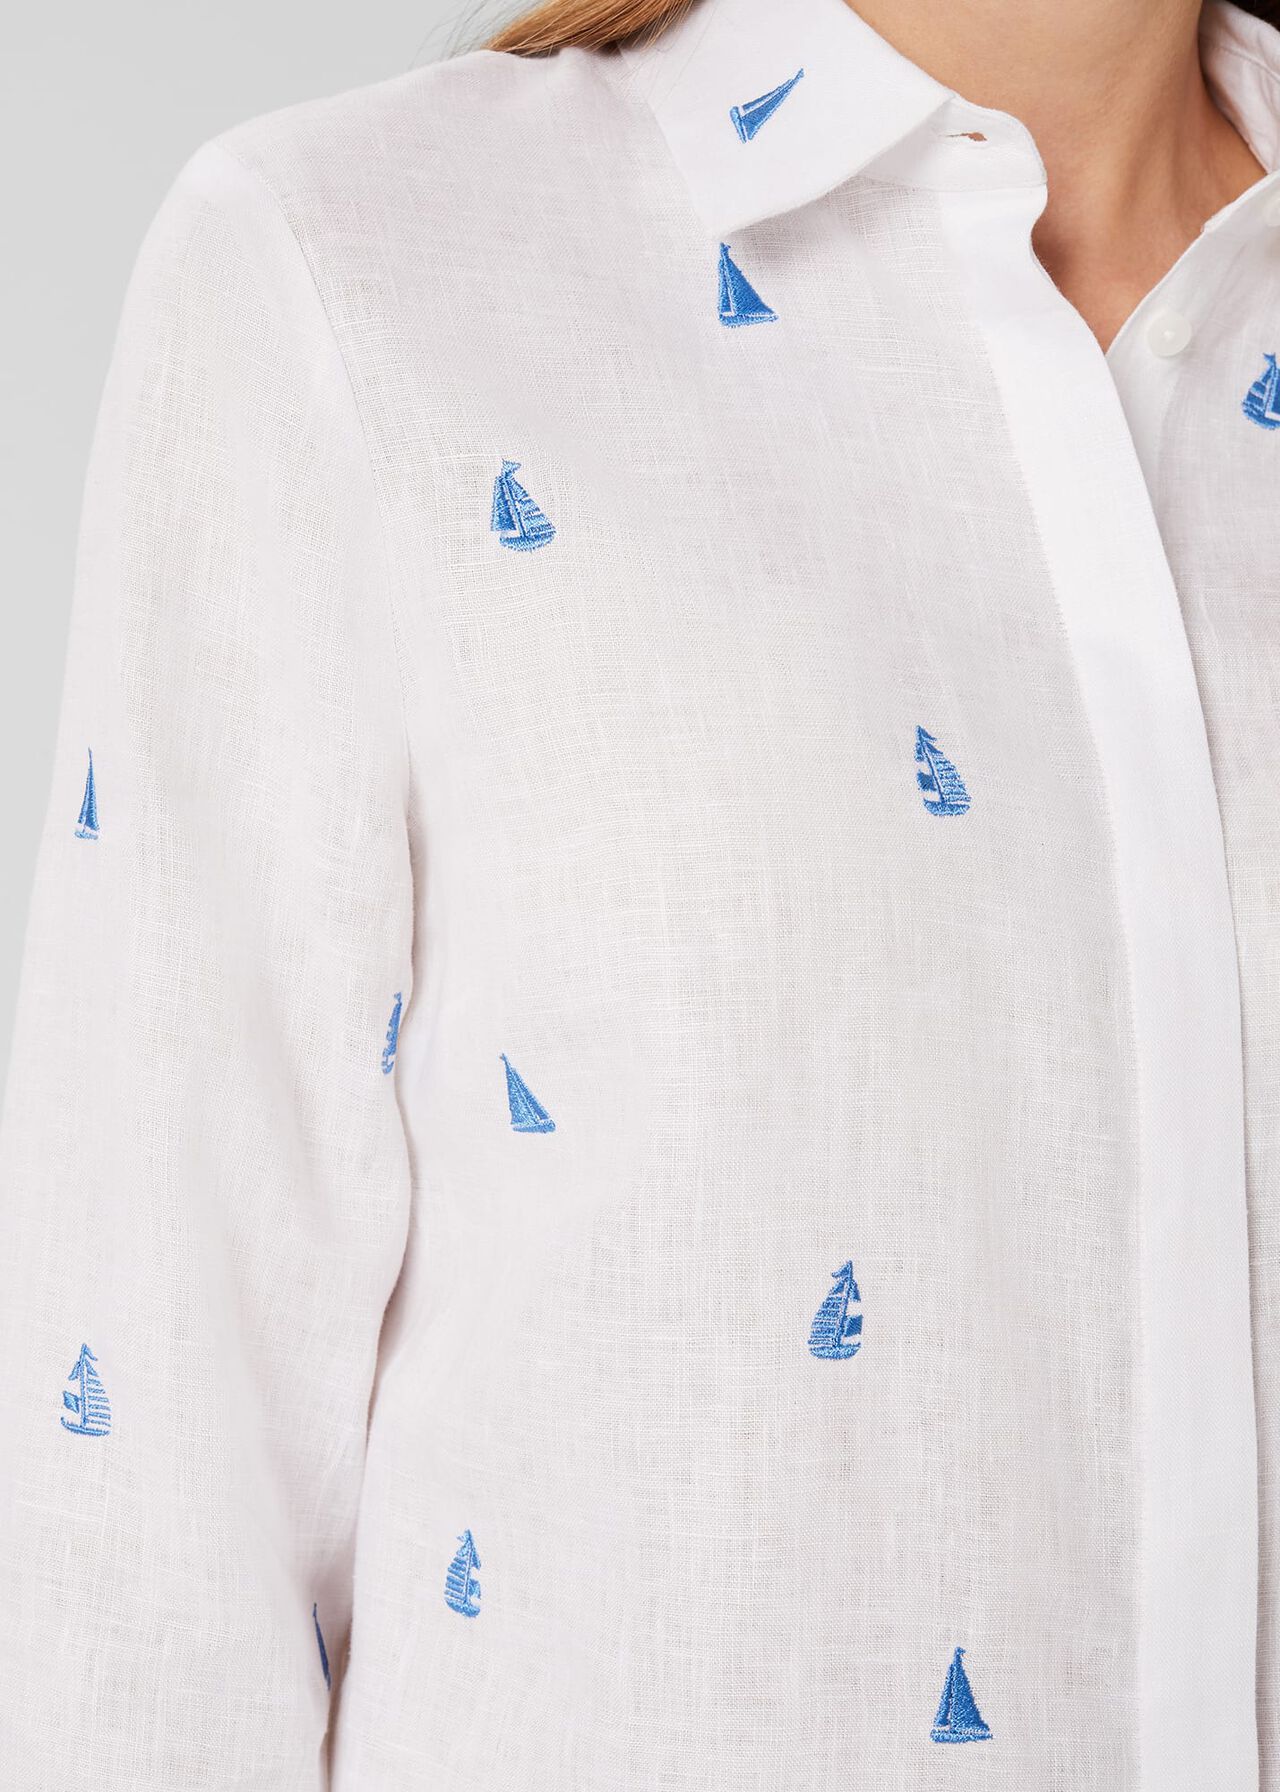 Embroidered Nita Linen Shirt, White Sky Blue, hi-res